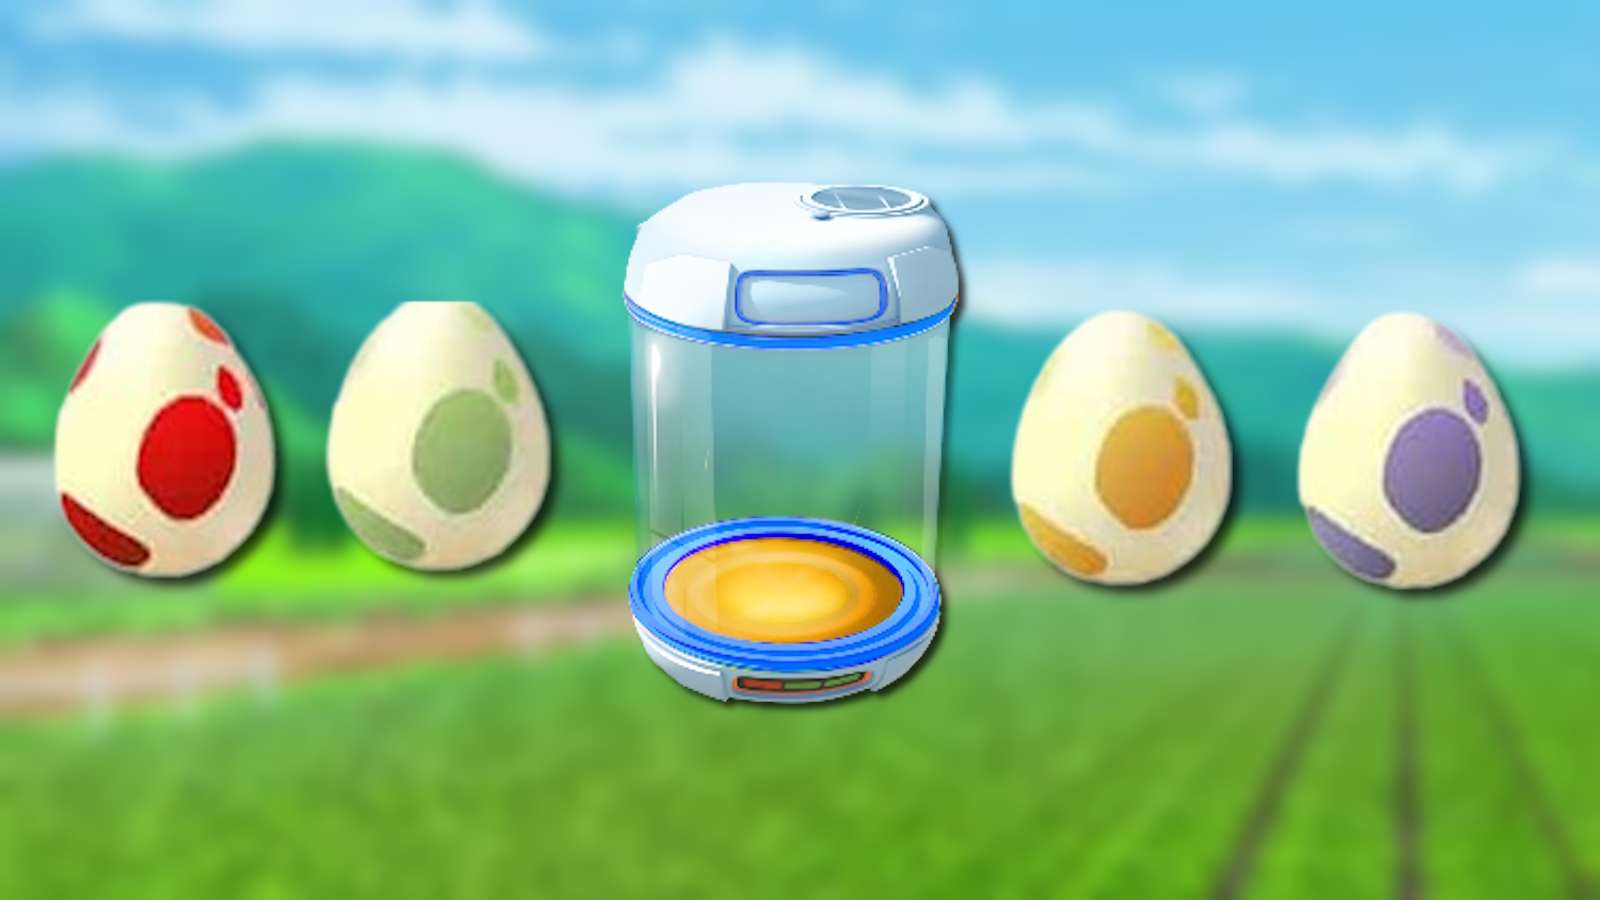 Pokemon Go egg incubator with 3km, 5km, 10km, and 12km eggs.